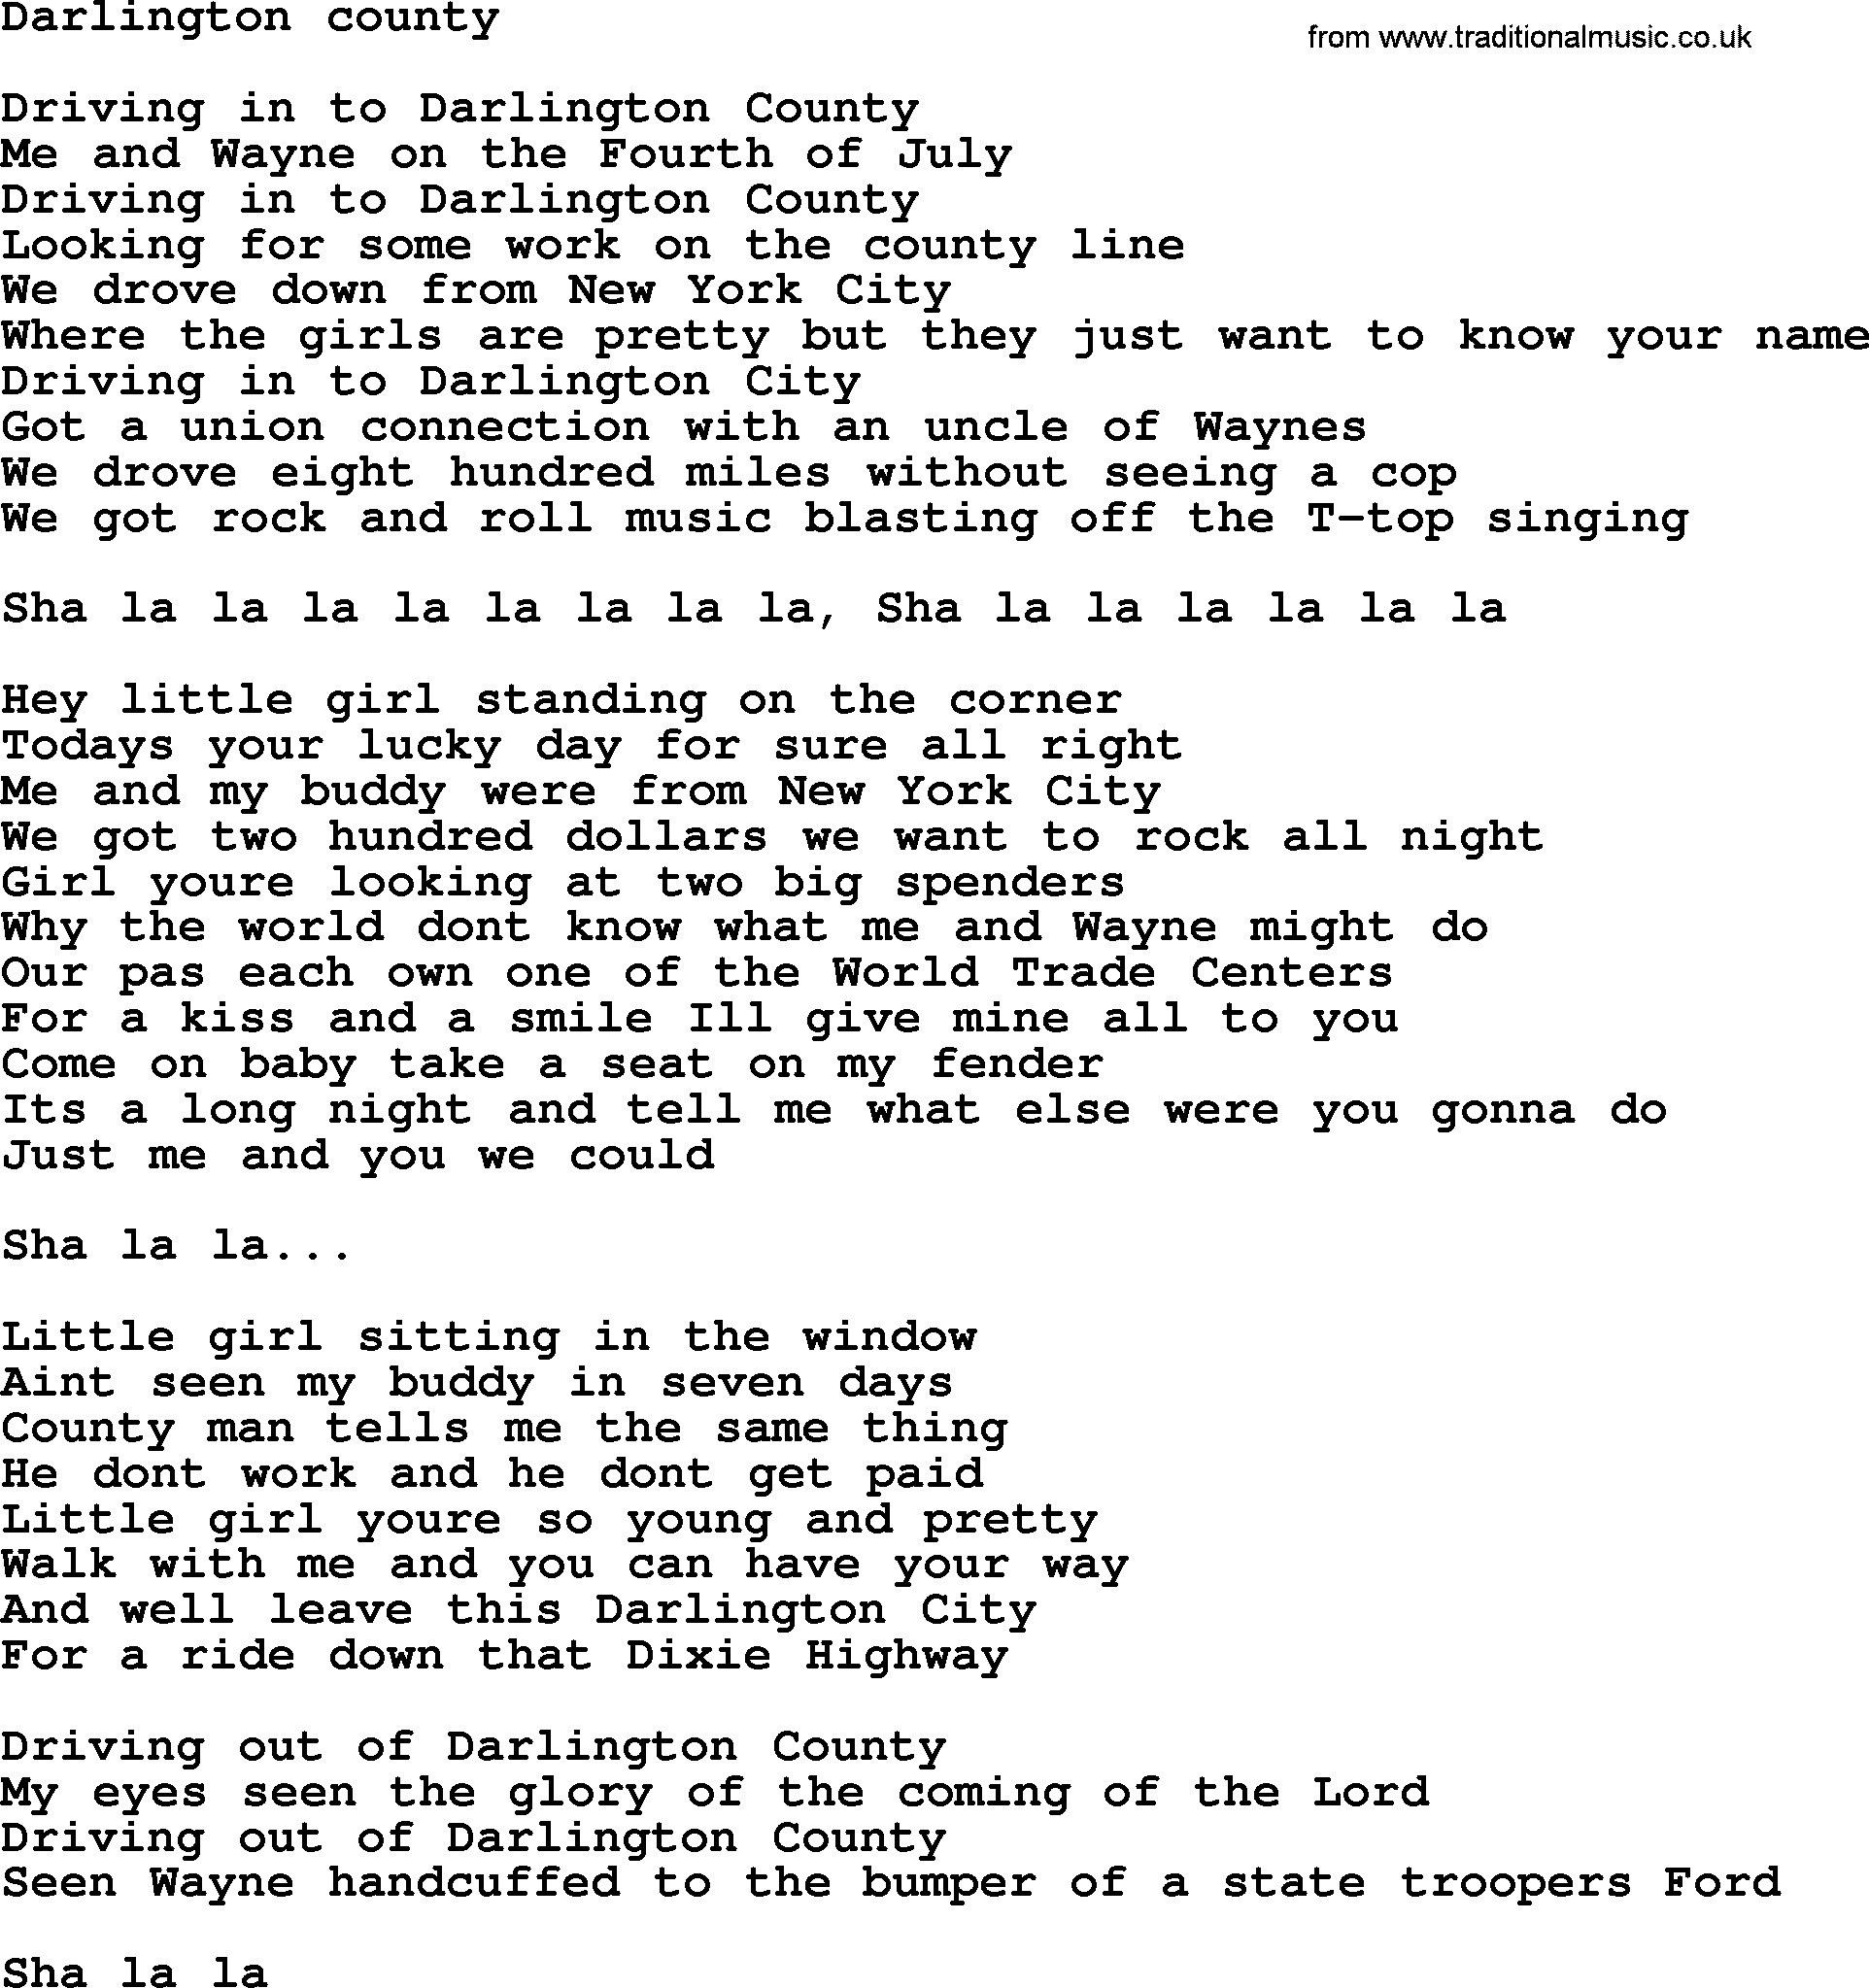 Bruce Springsteen song: Darlington County lyrics